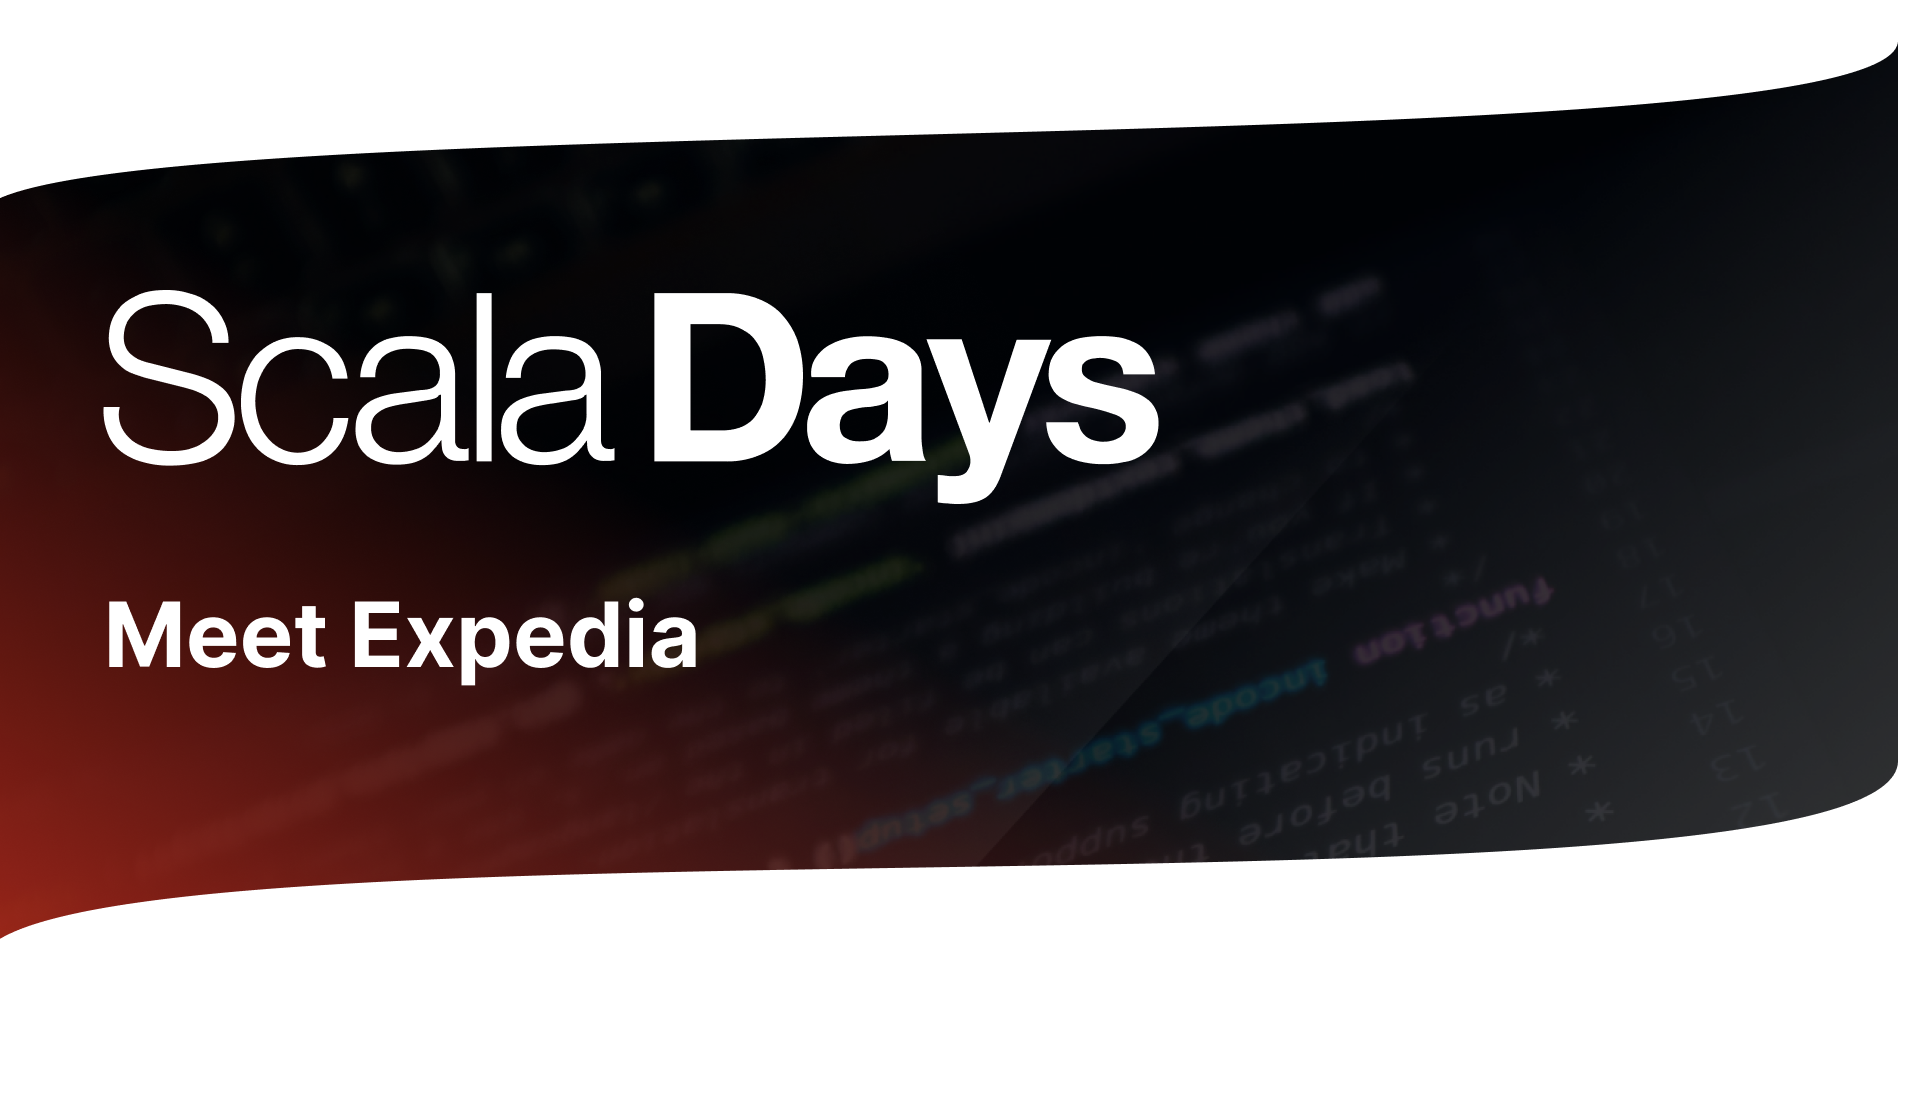 Scala Days Meet the Sponsor, Expedia